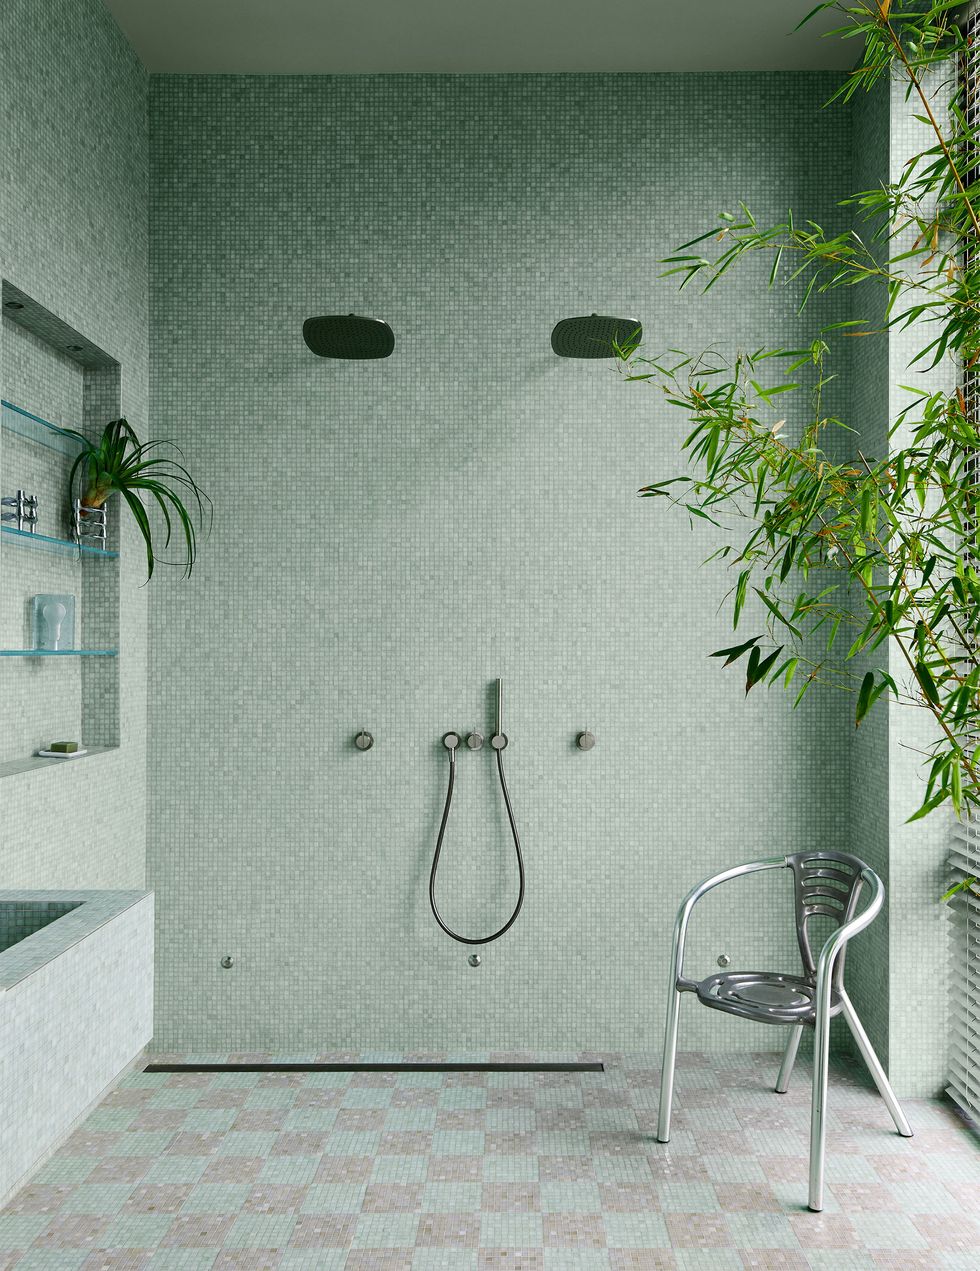 60 Modern Bathroom Ideas That Are Awash in Luxury